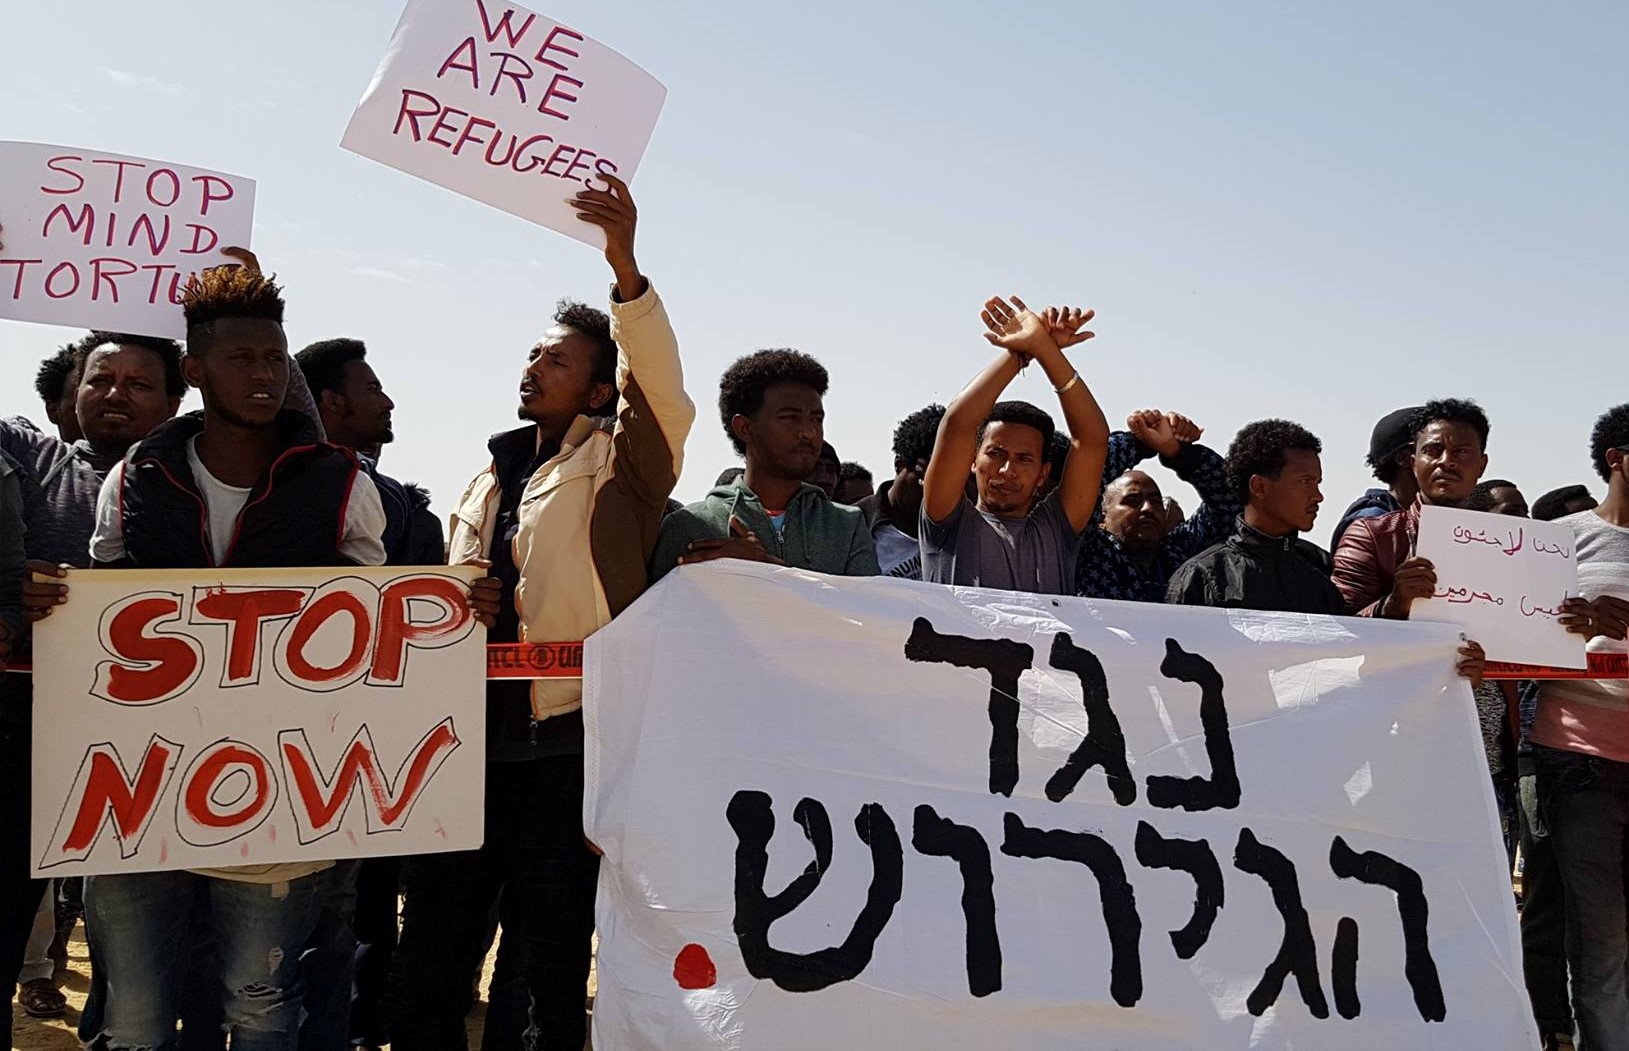 African asylum seekers demonstrate in Tel Aviv against deportation, June 2018; the large banner in Hebrew reads "Against Deportation."